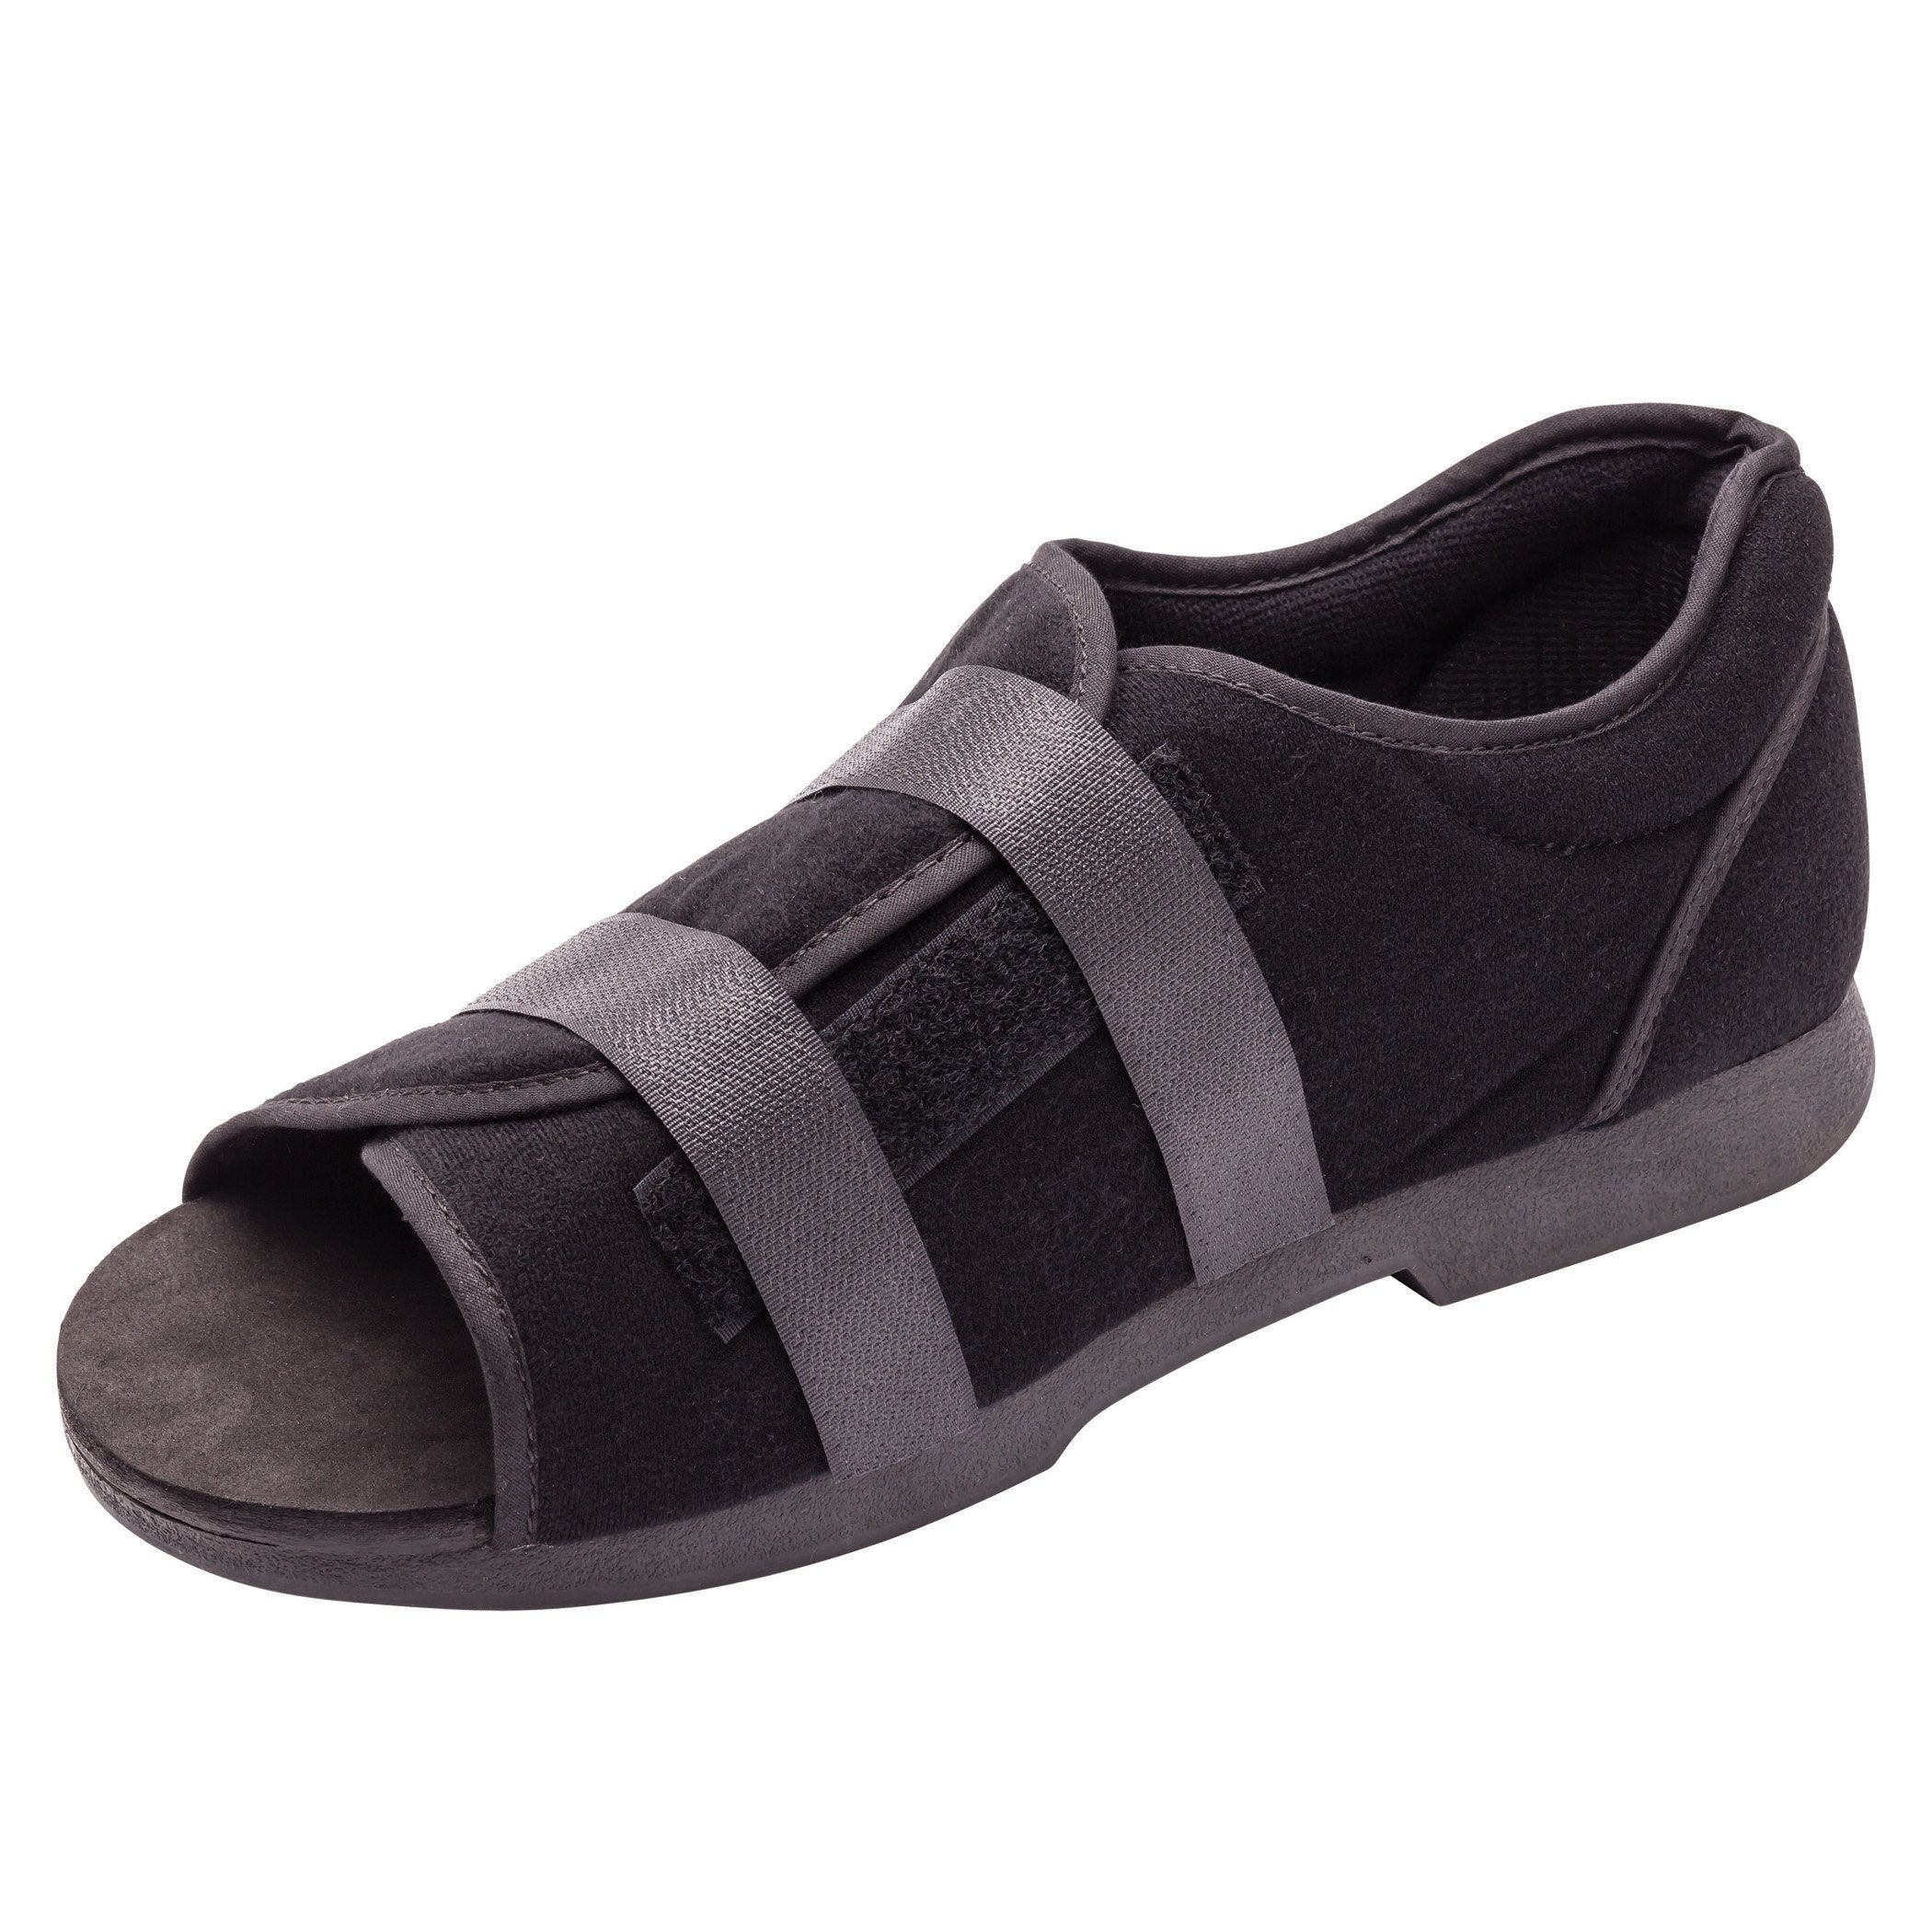 Soft Top Post-Op Shoe Össur® Small Adult Black